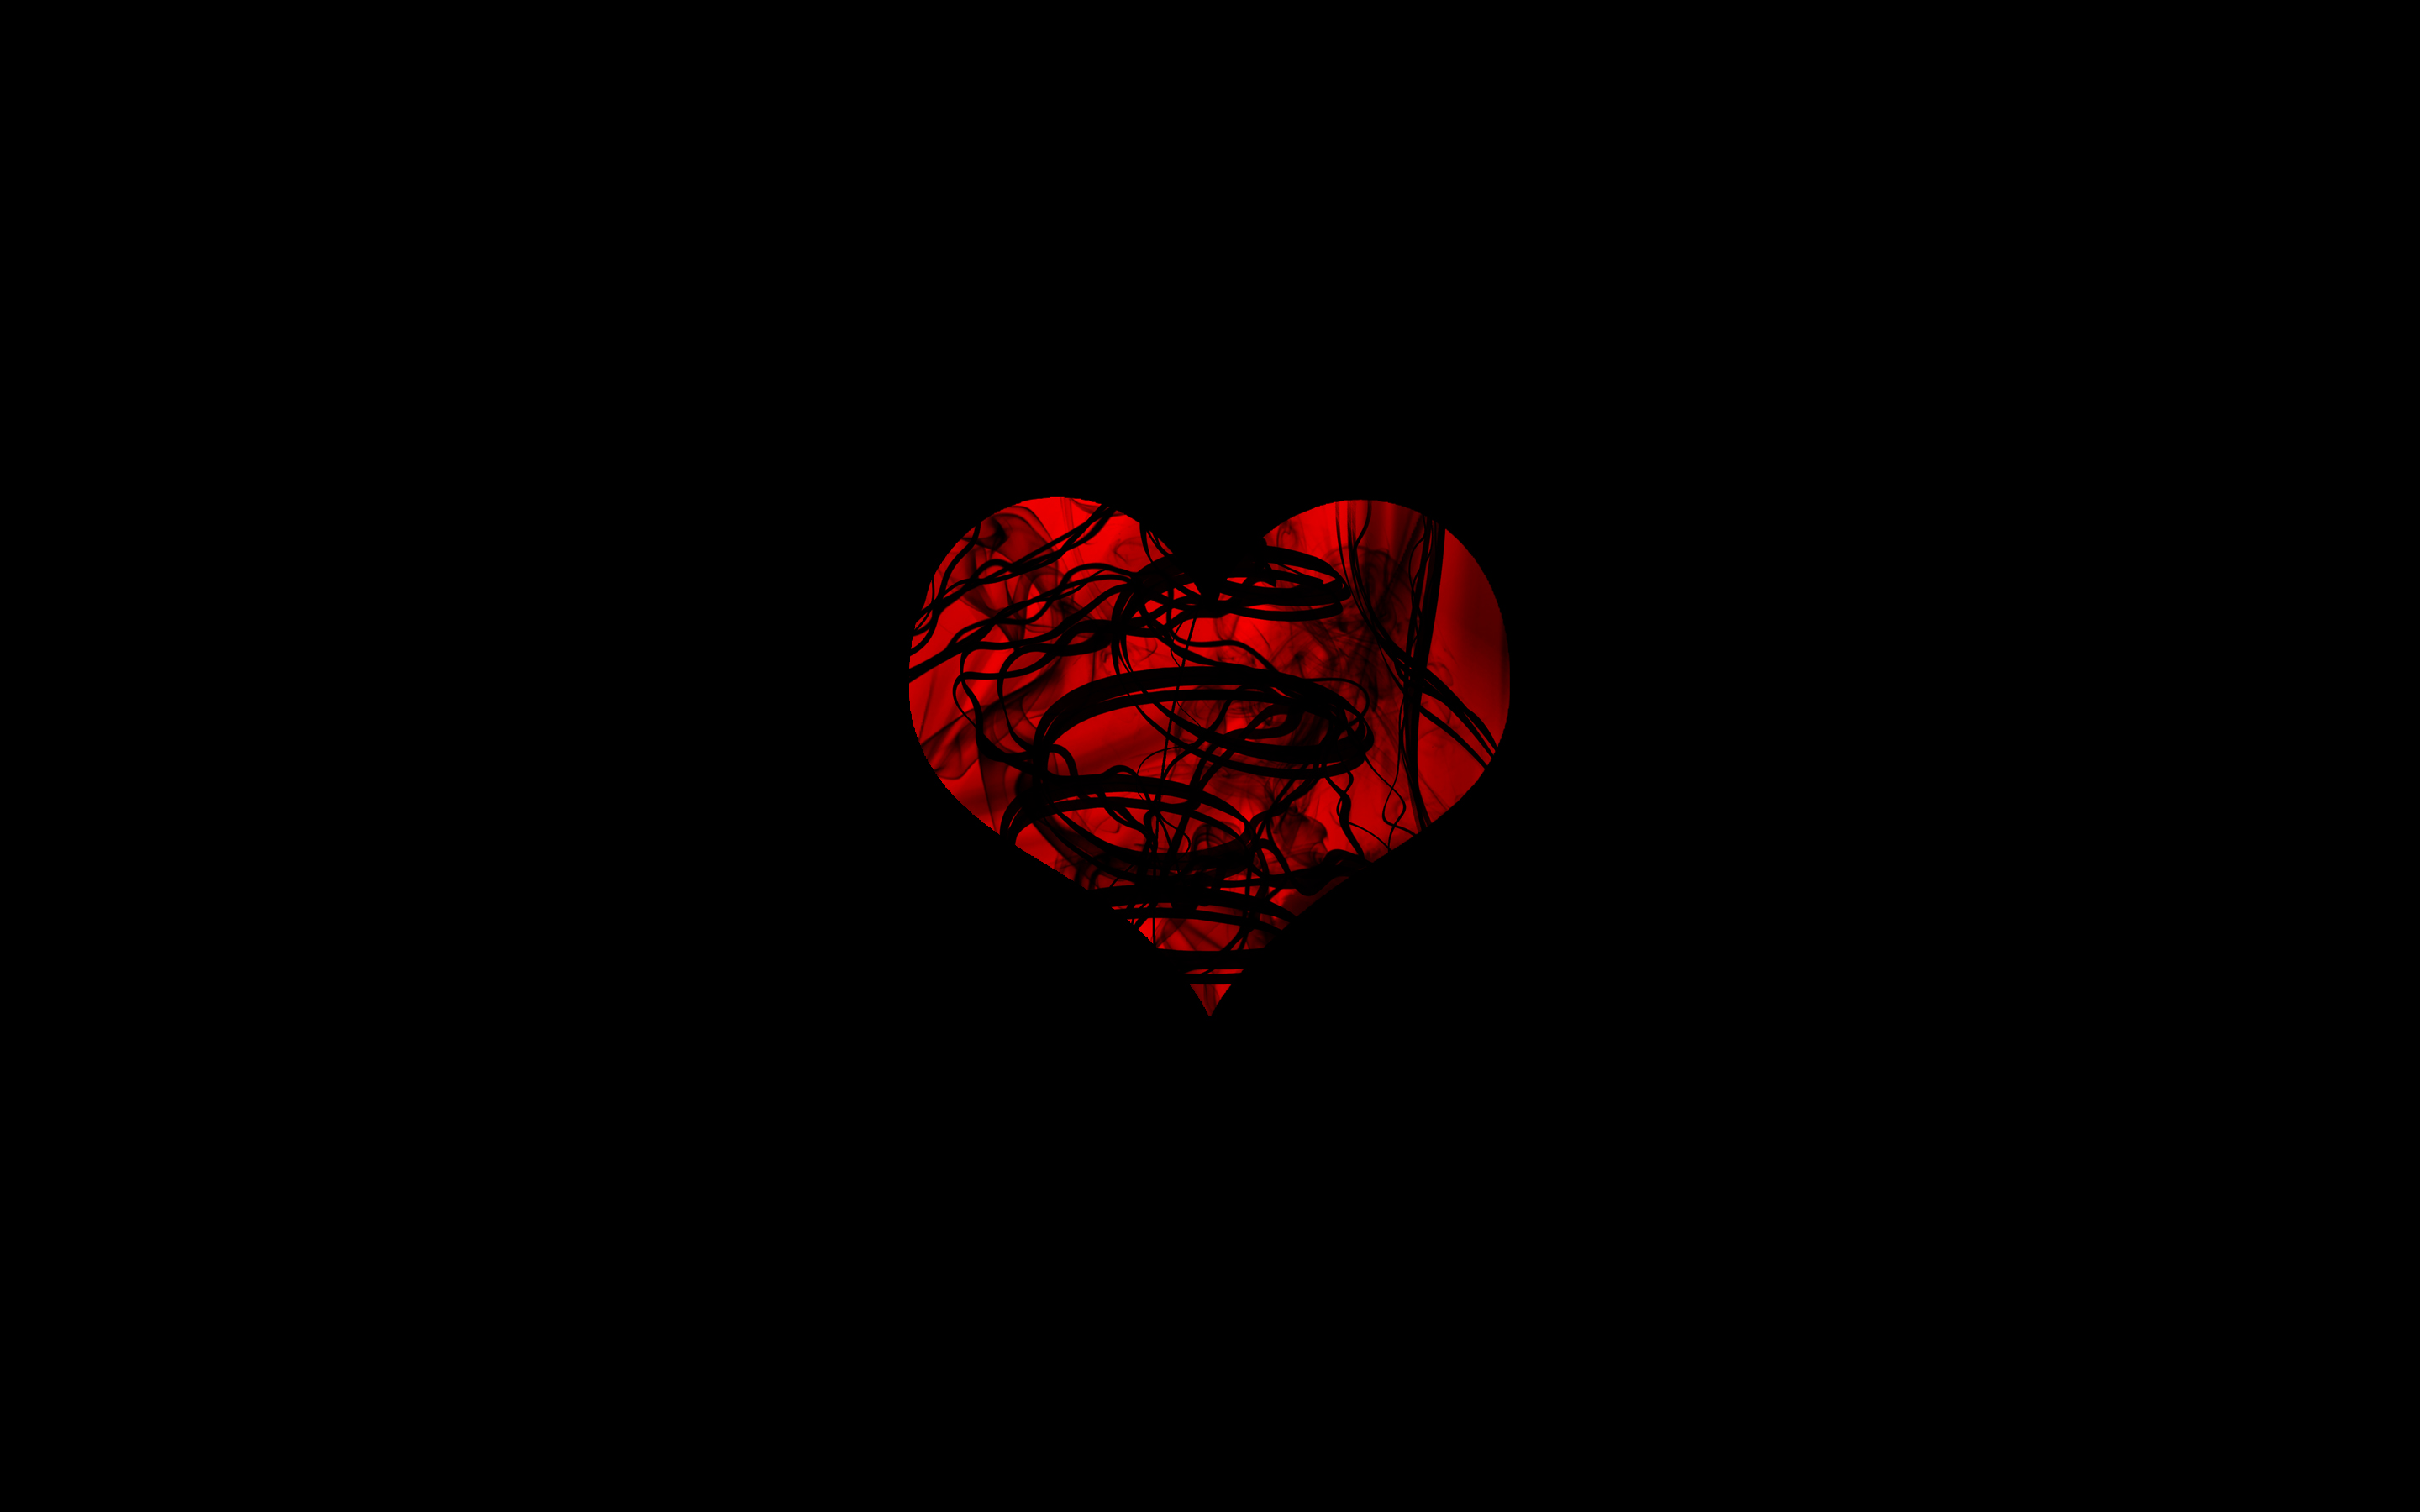 General 2880x1800 minimalism black red artwork black background heart (design) simple background